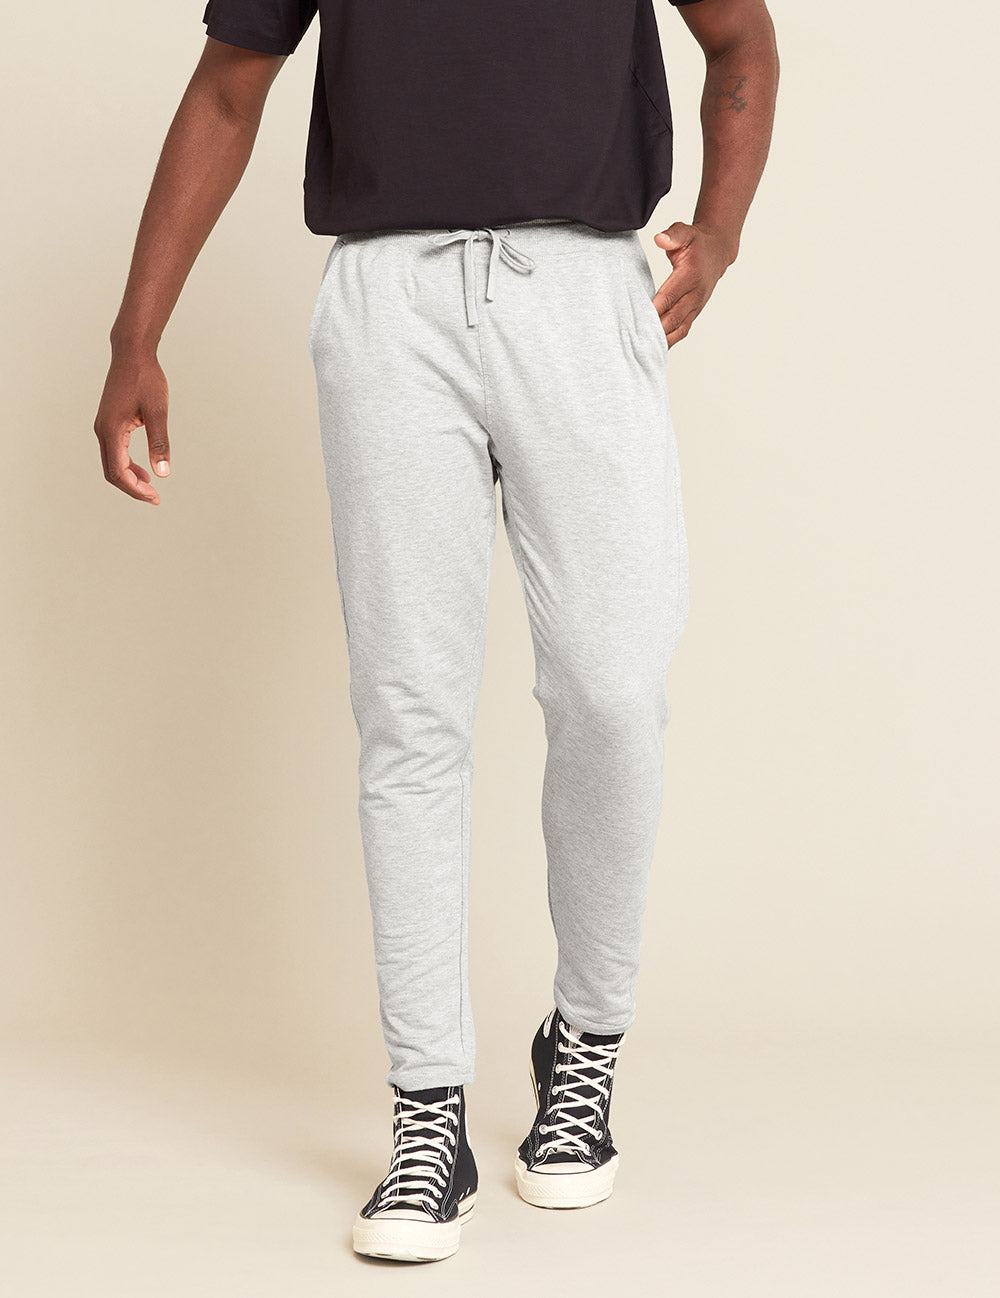 Men_s-Weekend-Sweatpants-Grey-Marl-Front.jpg